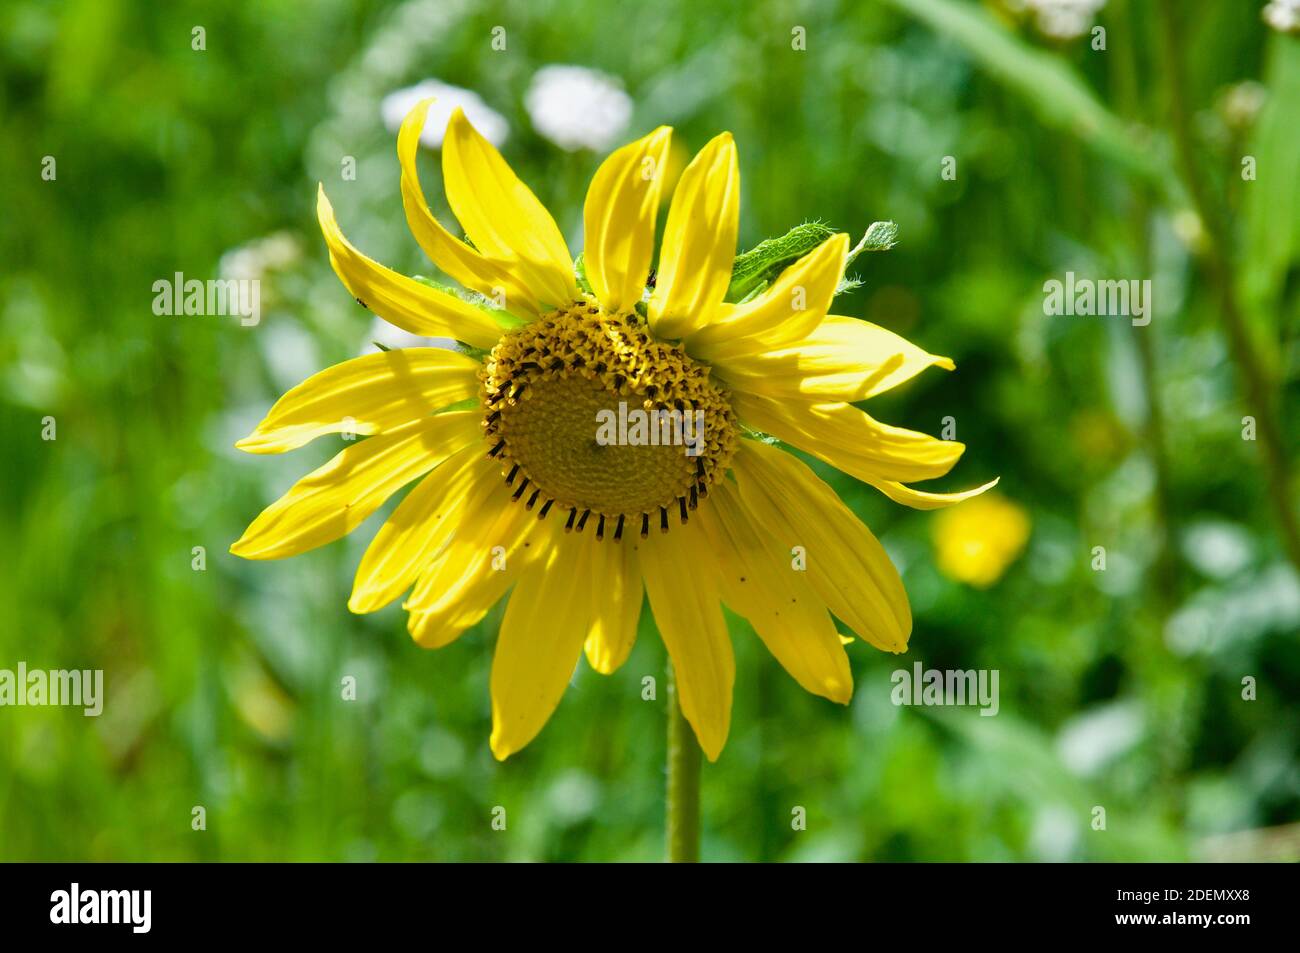 Arbusto de girasol fotografías e imágenes de alta resolución - Alamy